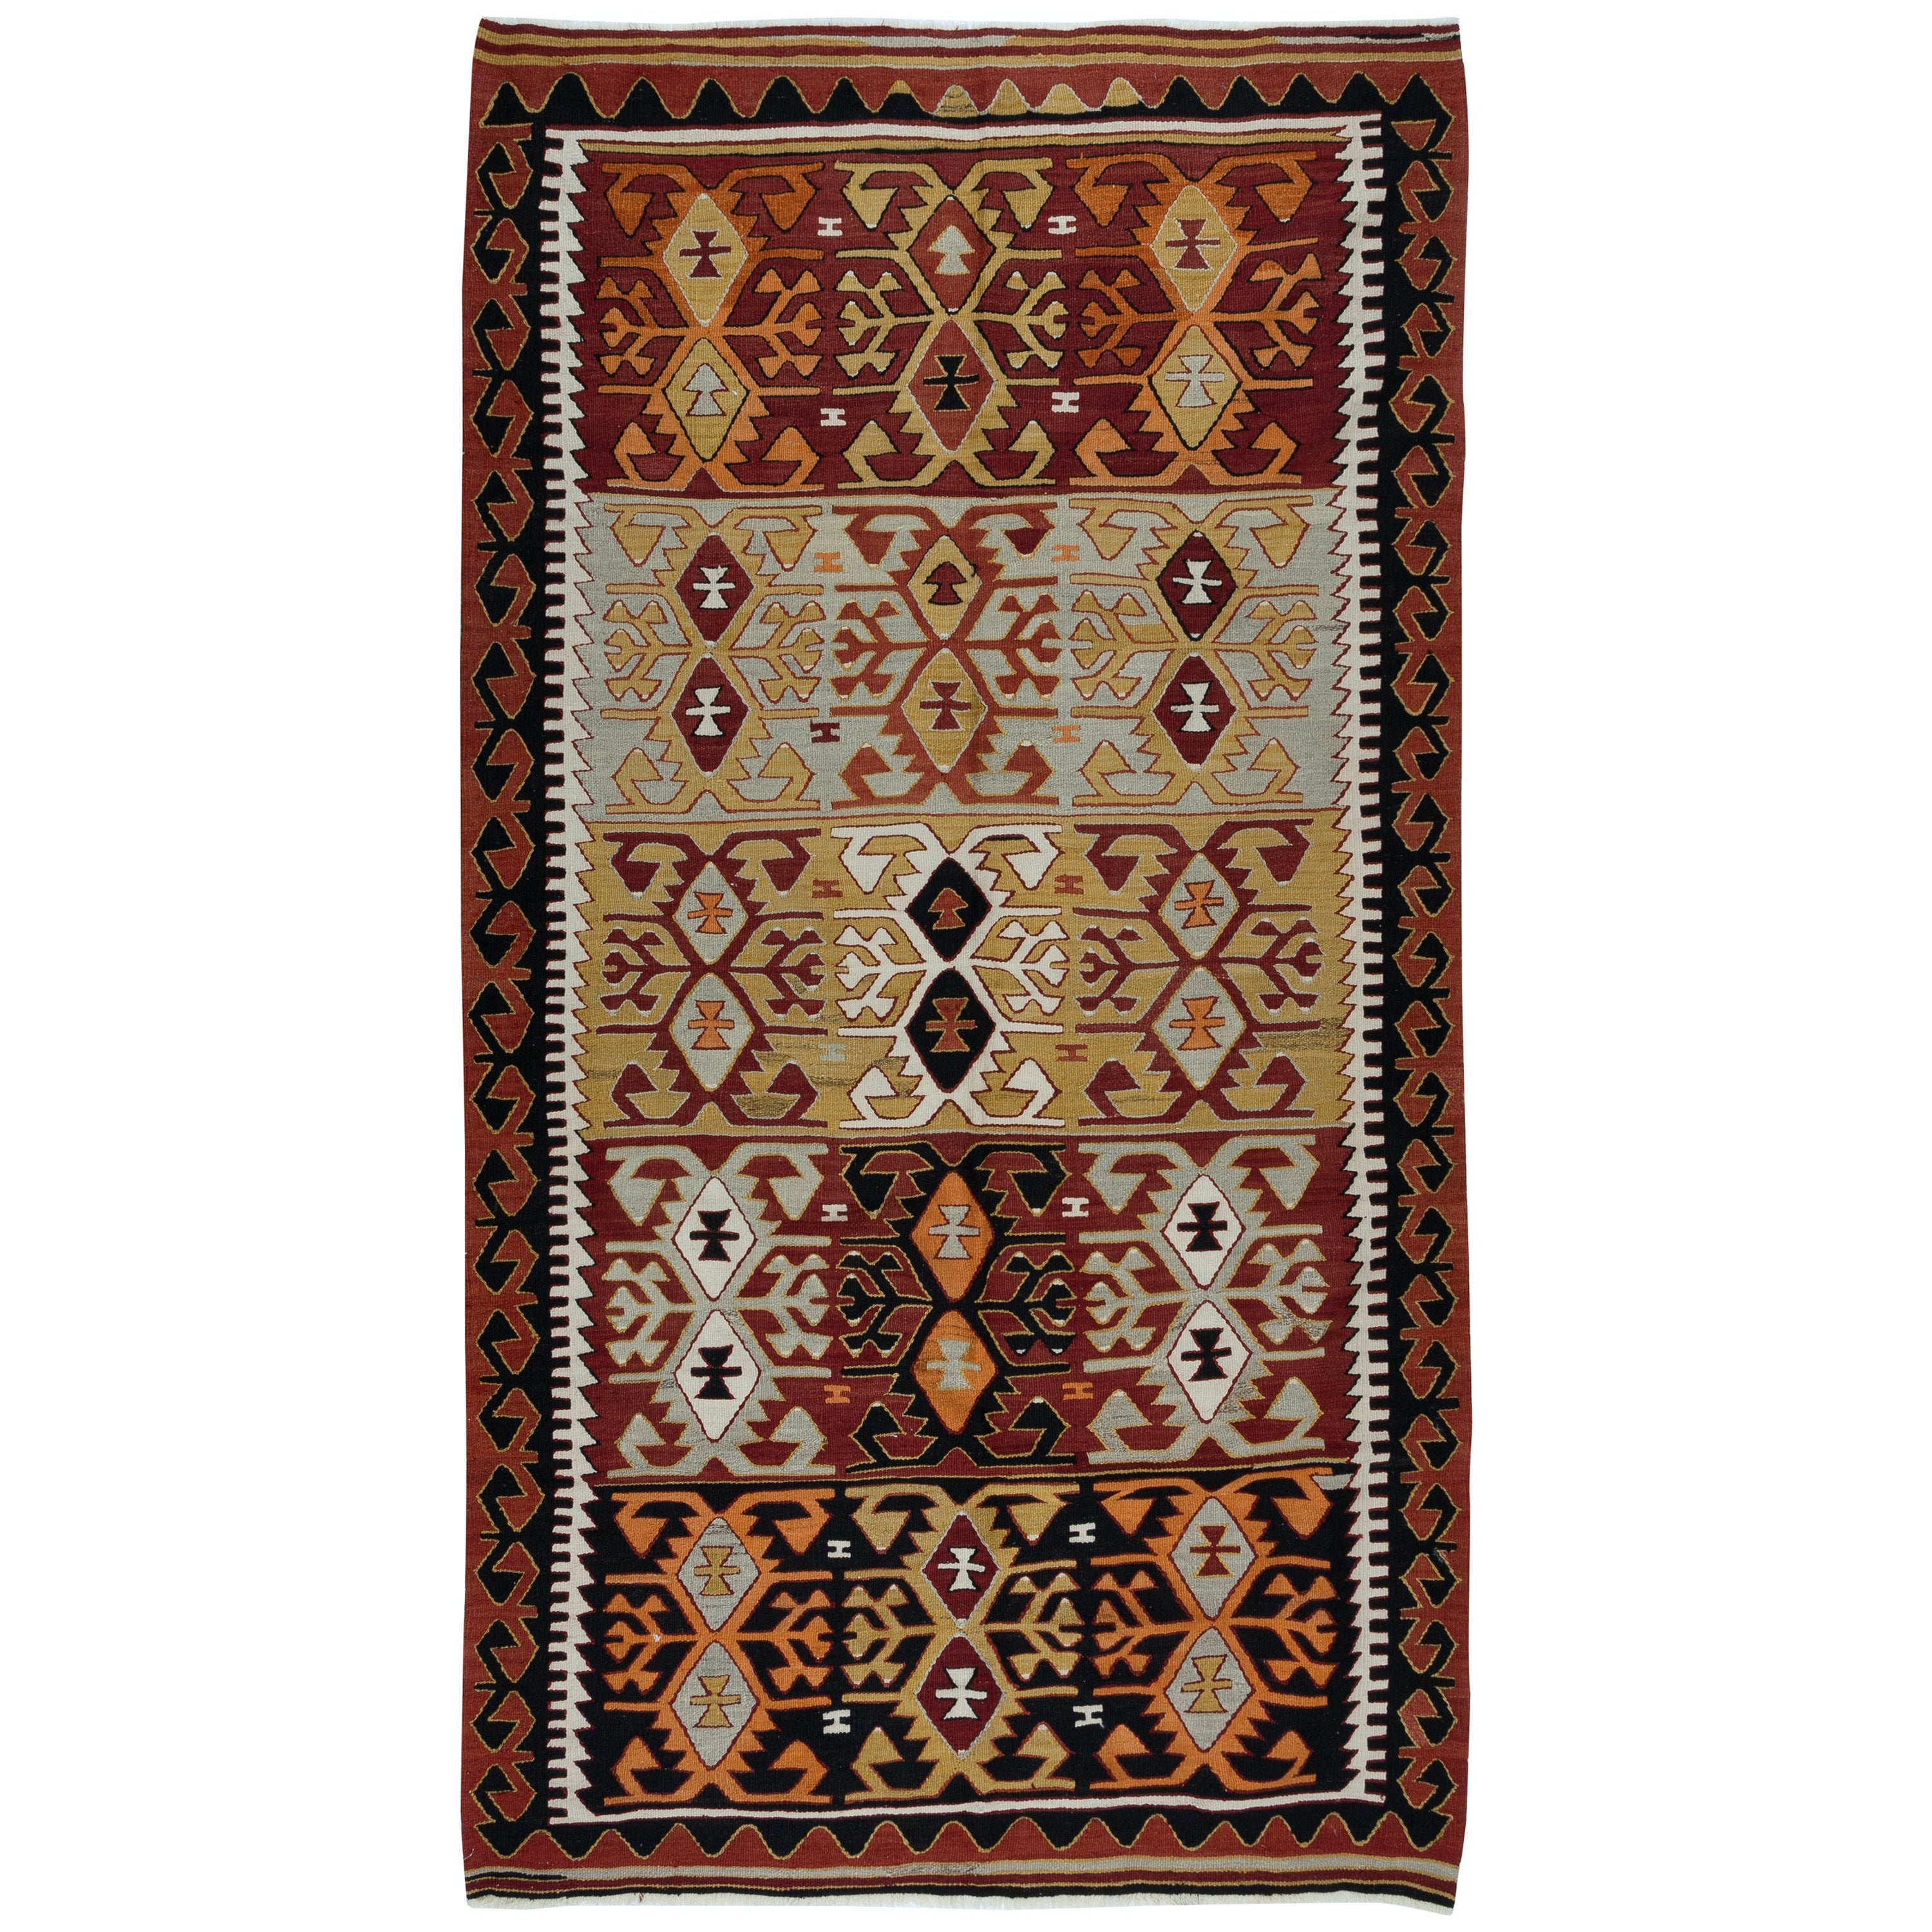 5.5x10 Ft Vintage Flat-Weave Kilim, Geometric Hand-Woven Rug, Colorful Carpet For Sale